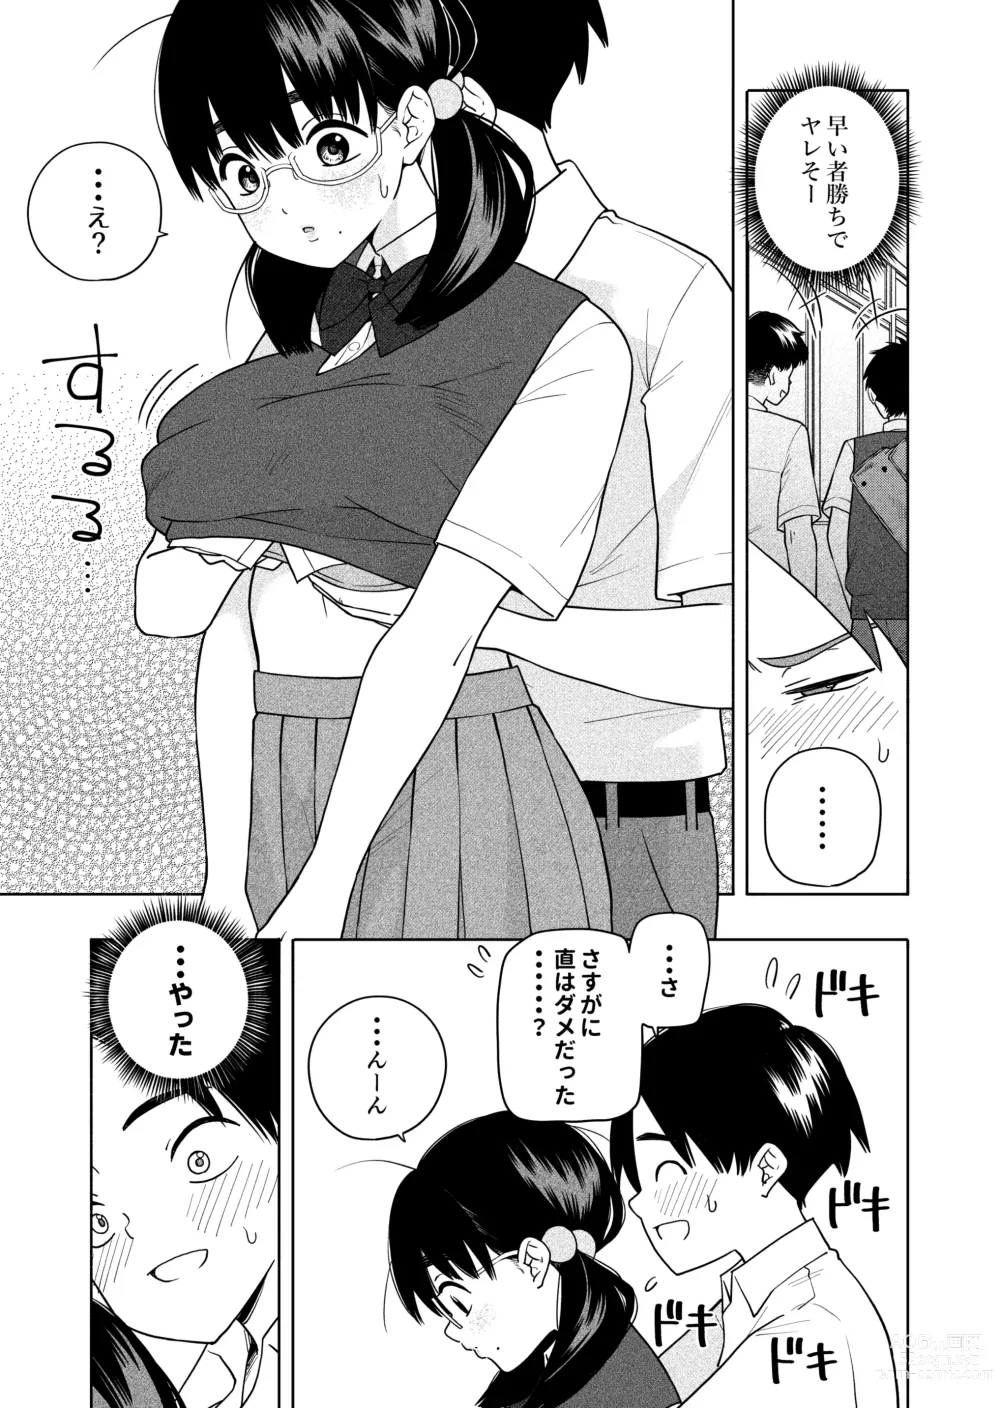 Page 13 of doujinshi Hoshikute, Motomete.